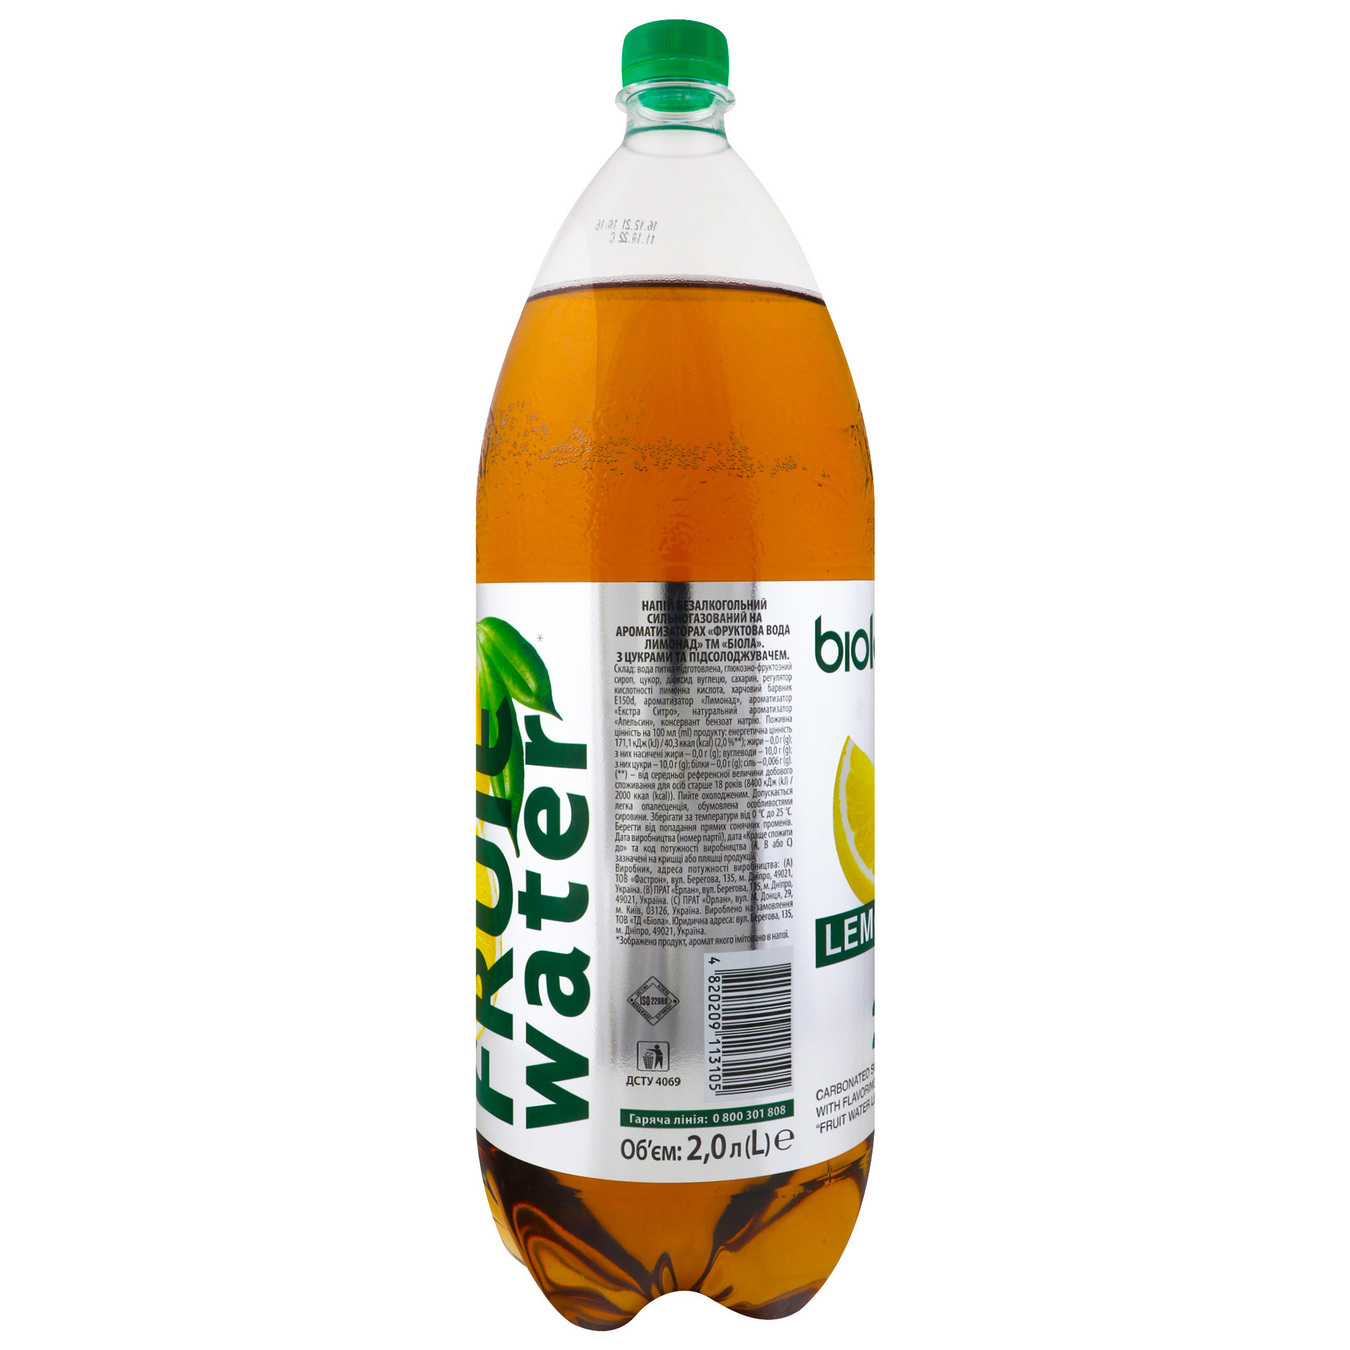 Carbonated drink Biola Lemonade 2l 2